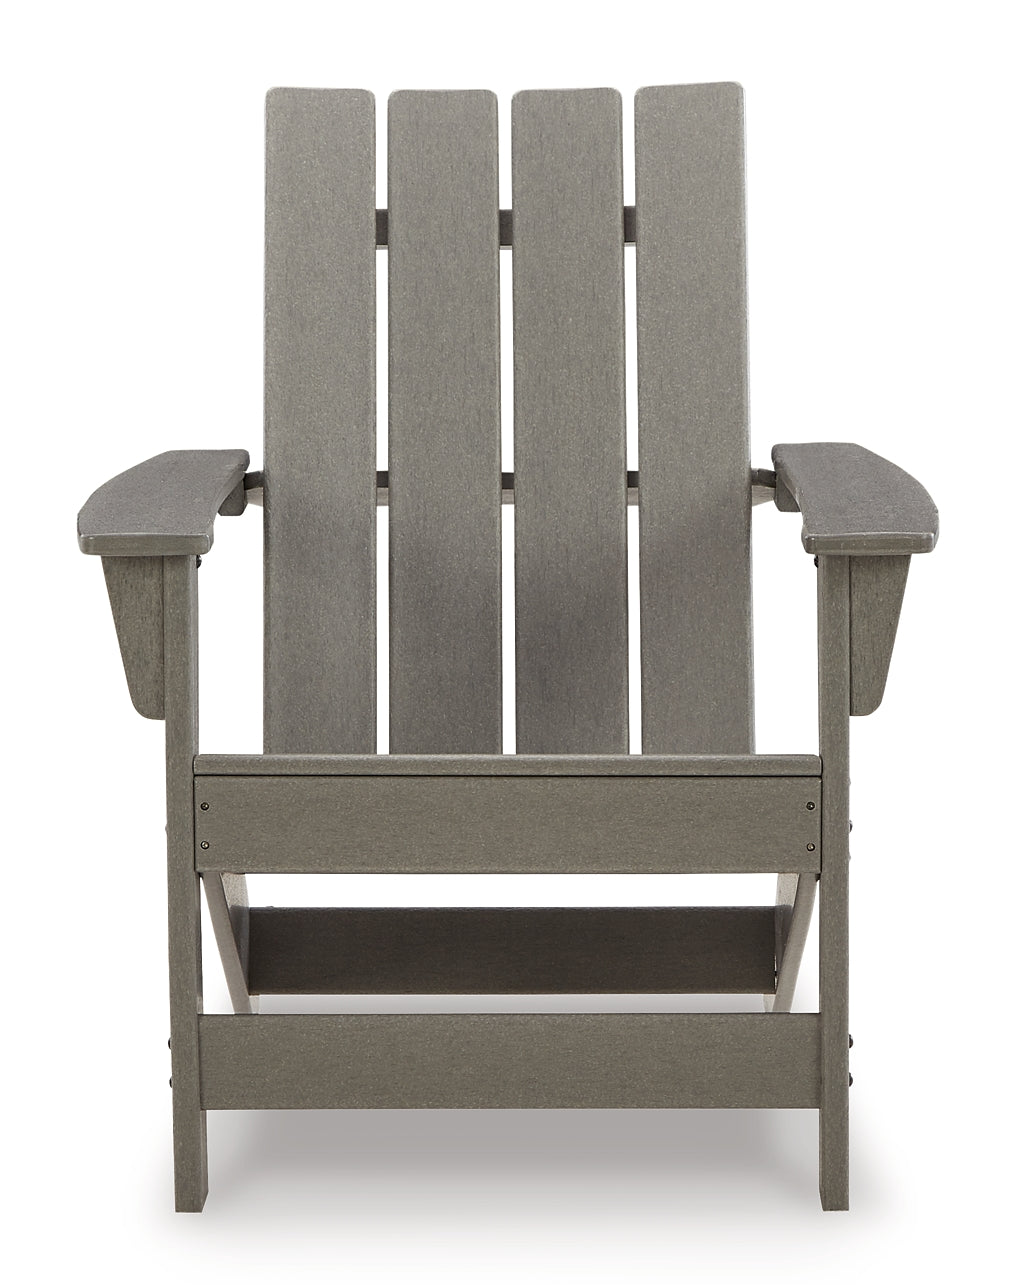 Visola Outdoor Chair with End Table Wilson Furniture (OH)  in Bridgeport, Ohio. Serving Moundsville, Richmond, Smithfield, Cadiz, & St. Clairesville